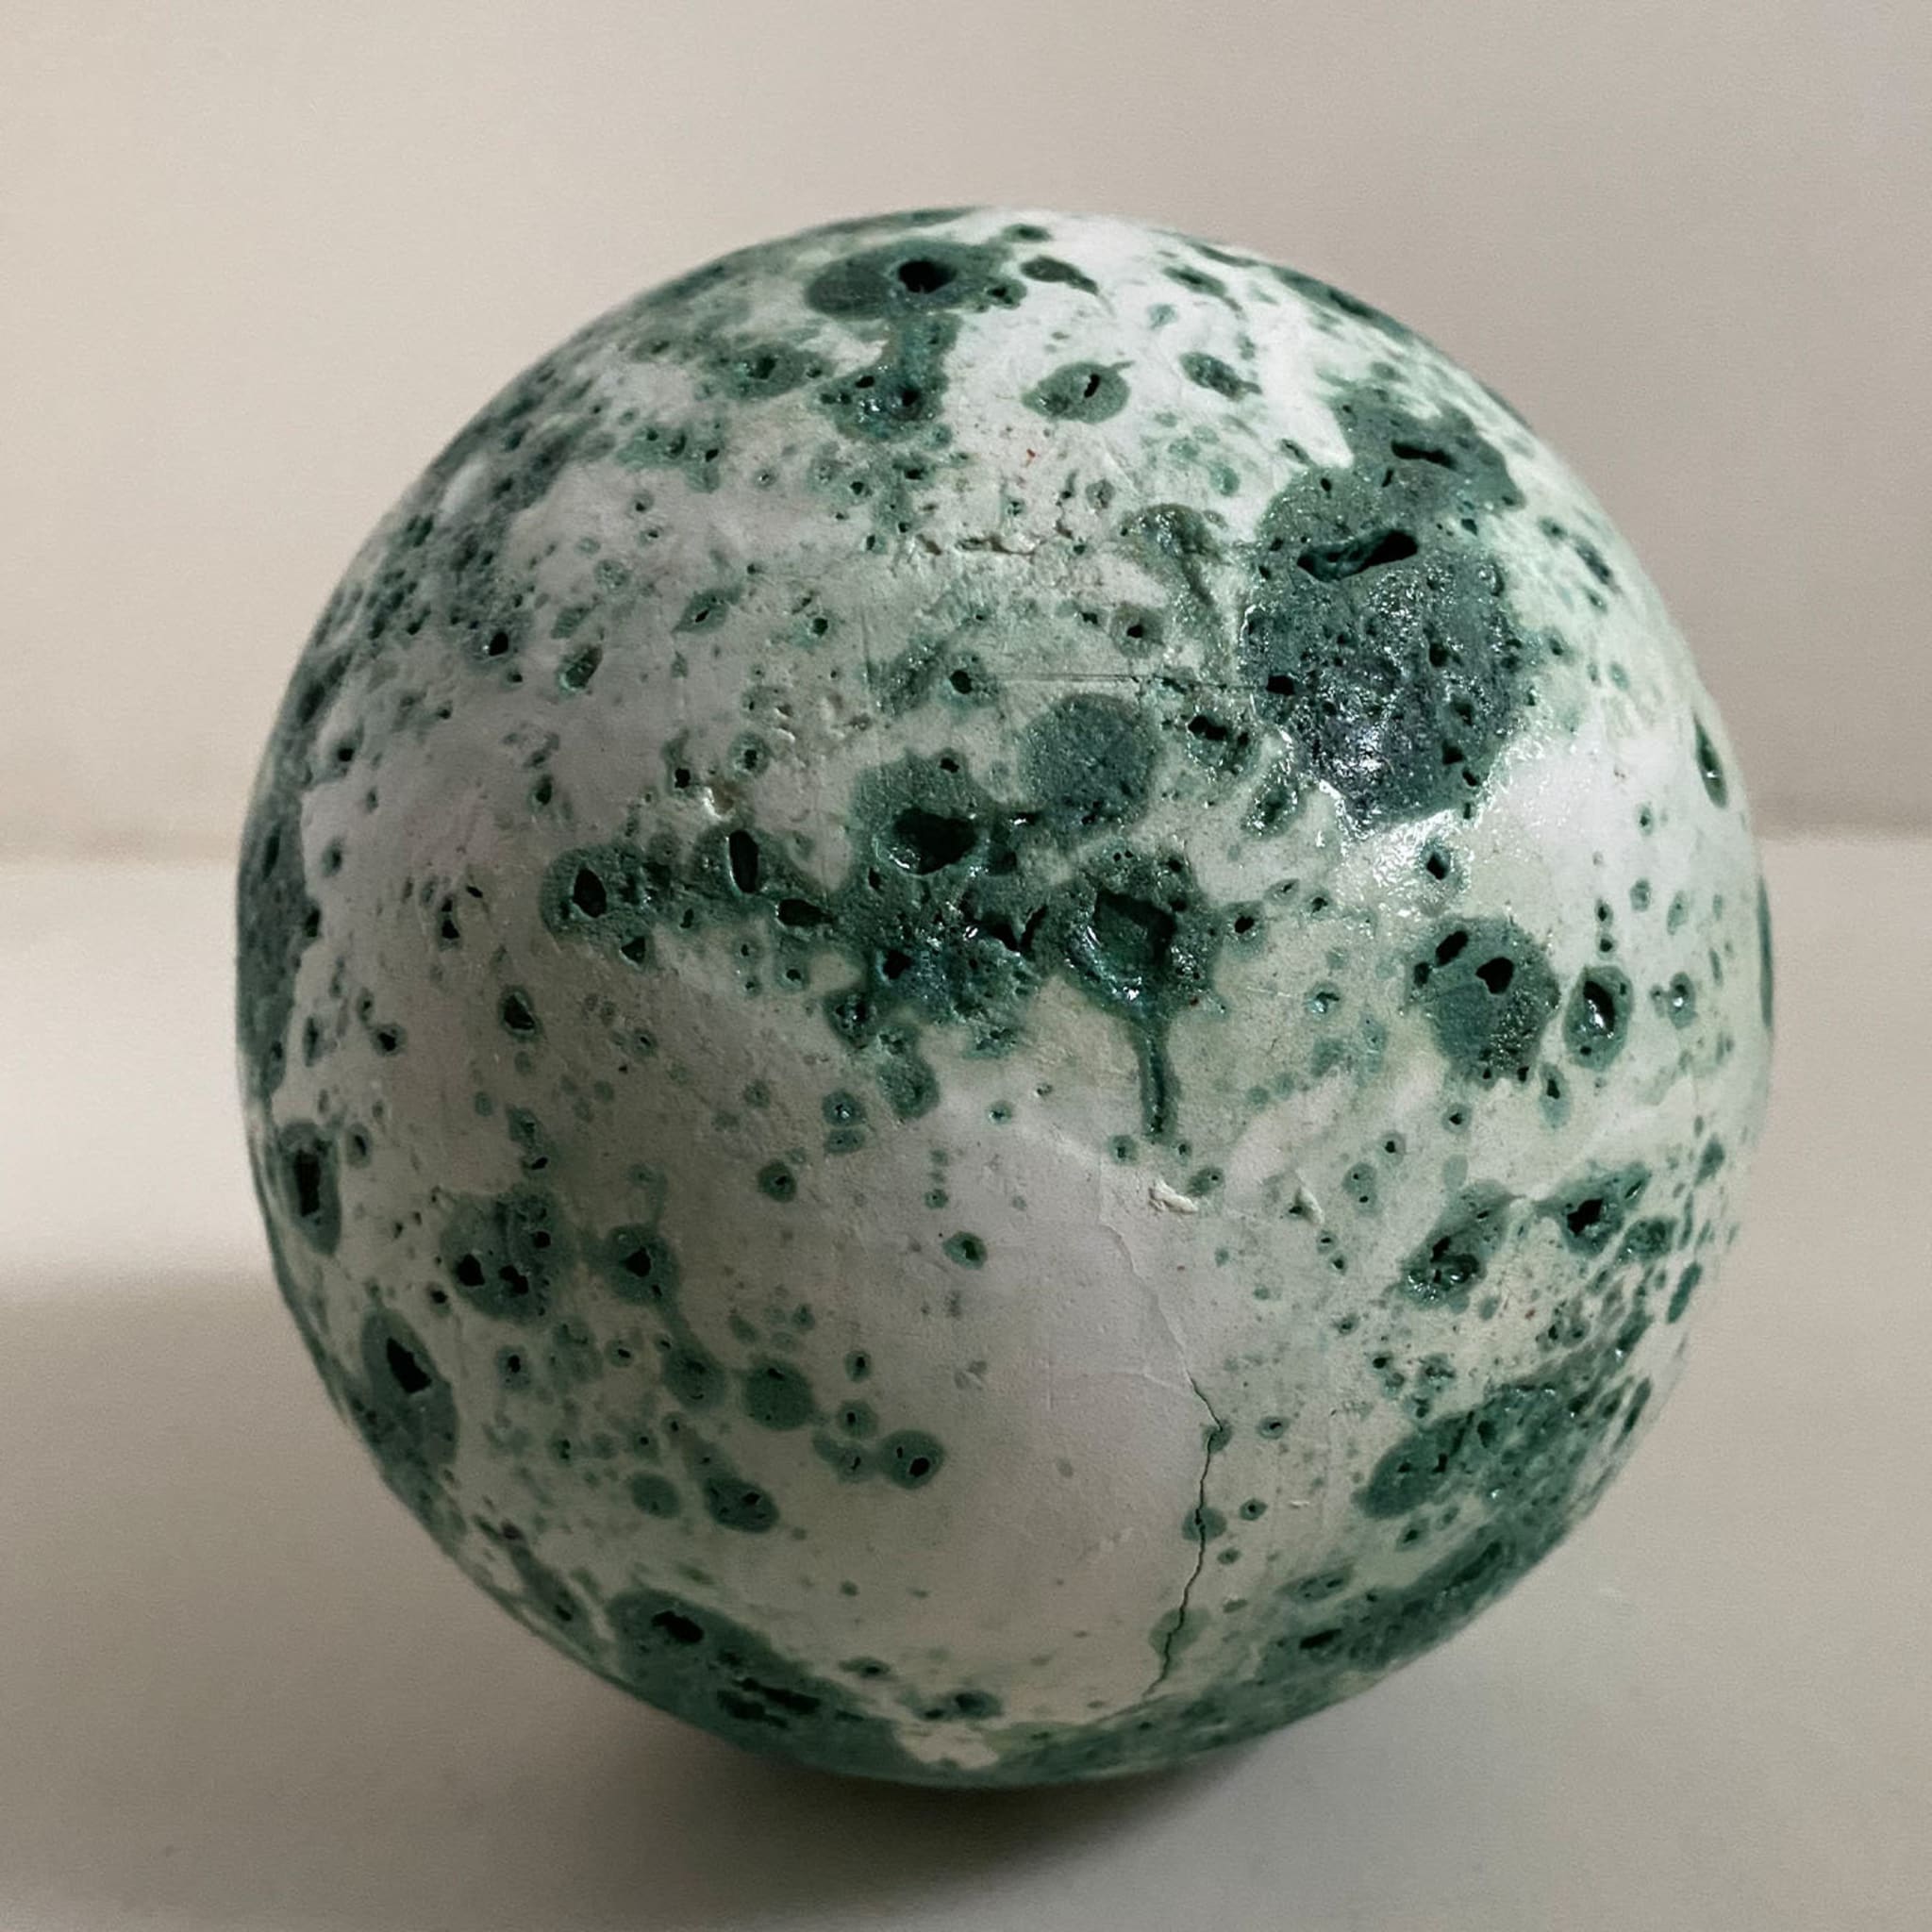 Materia Green Vase by Stefania Loschi - Alternative view 2